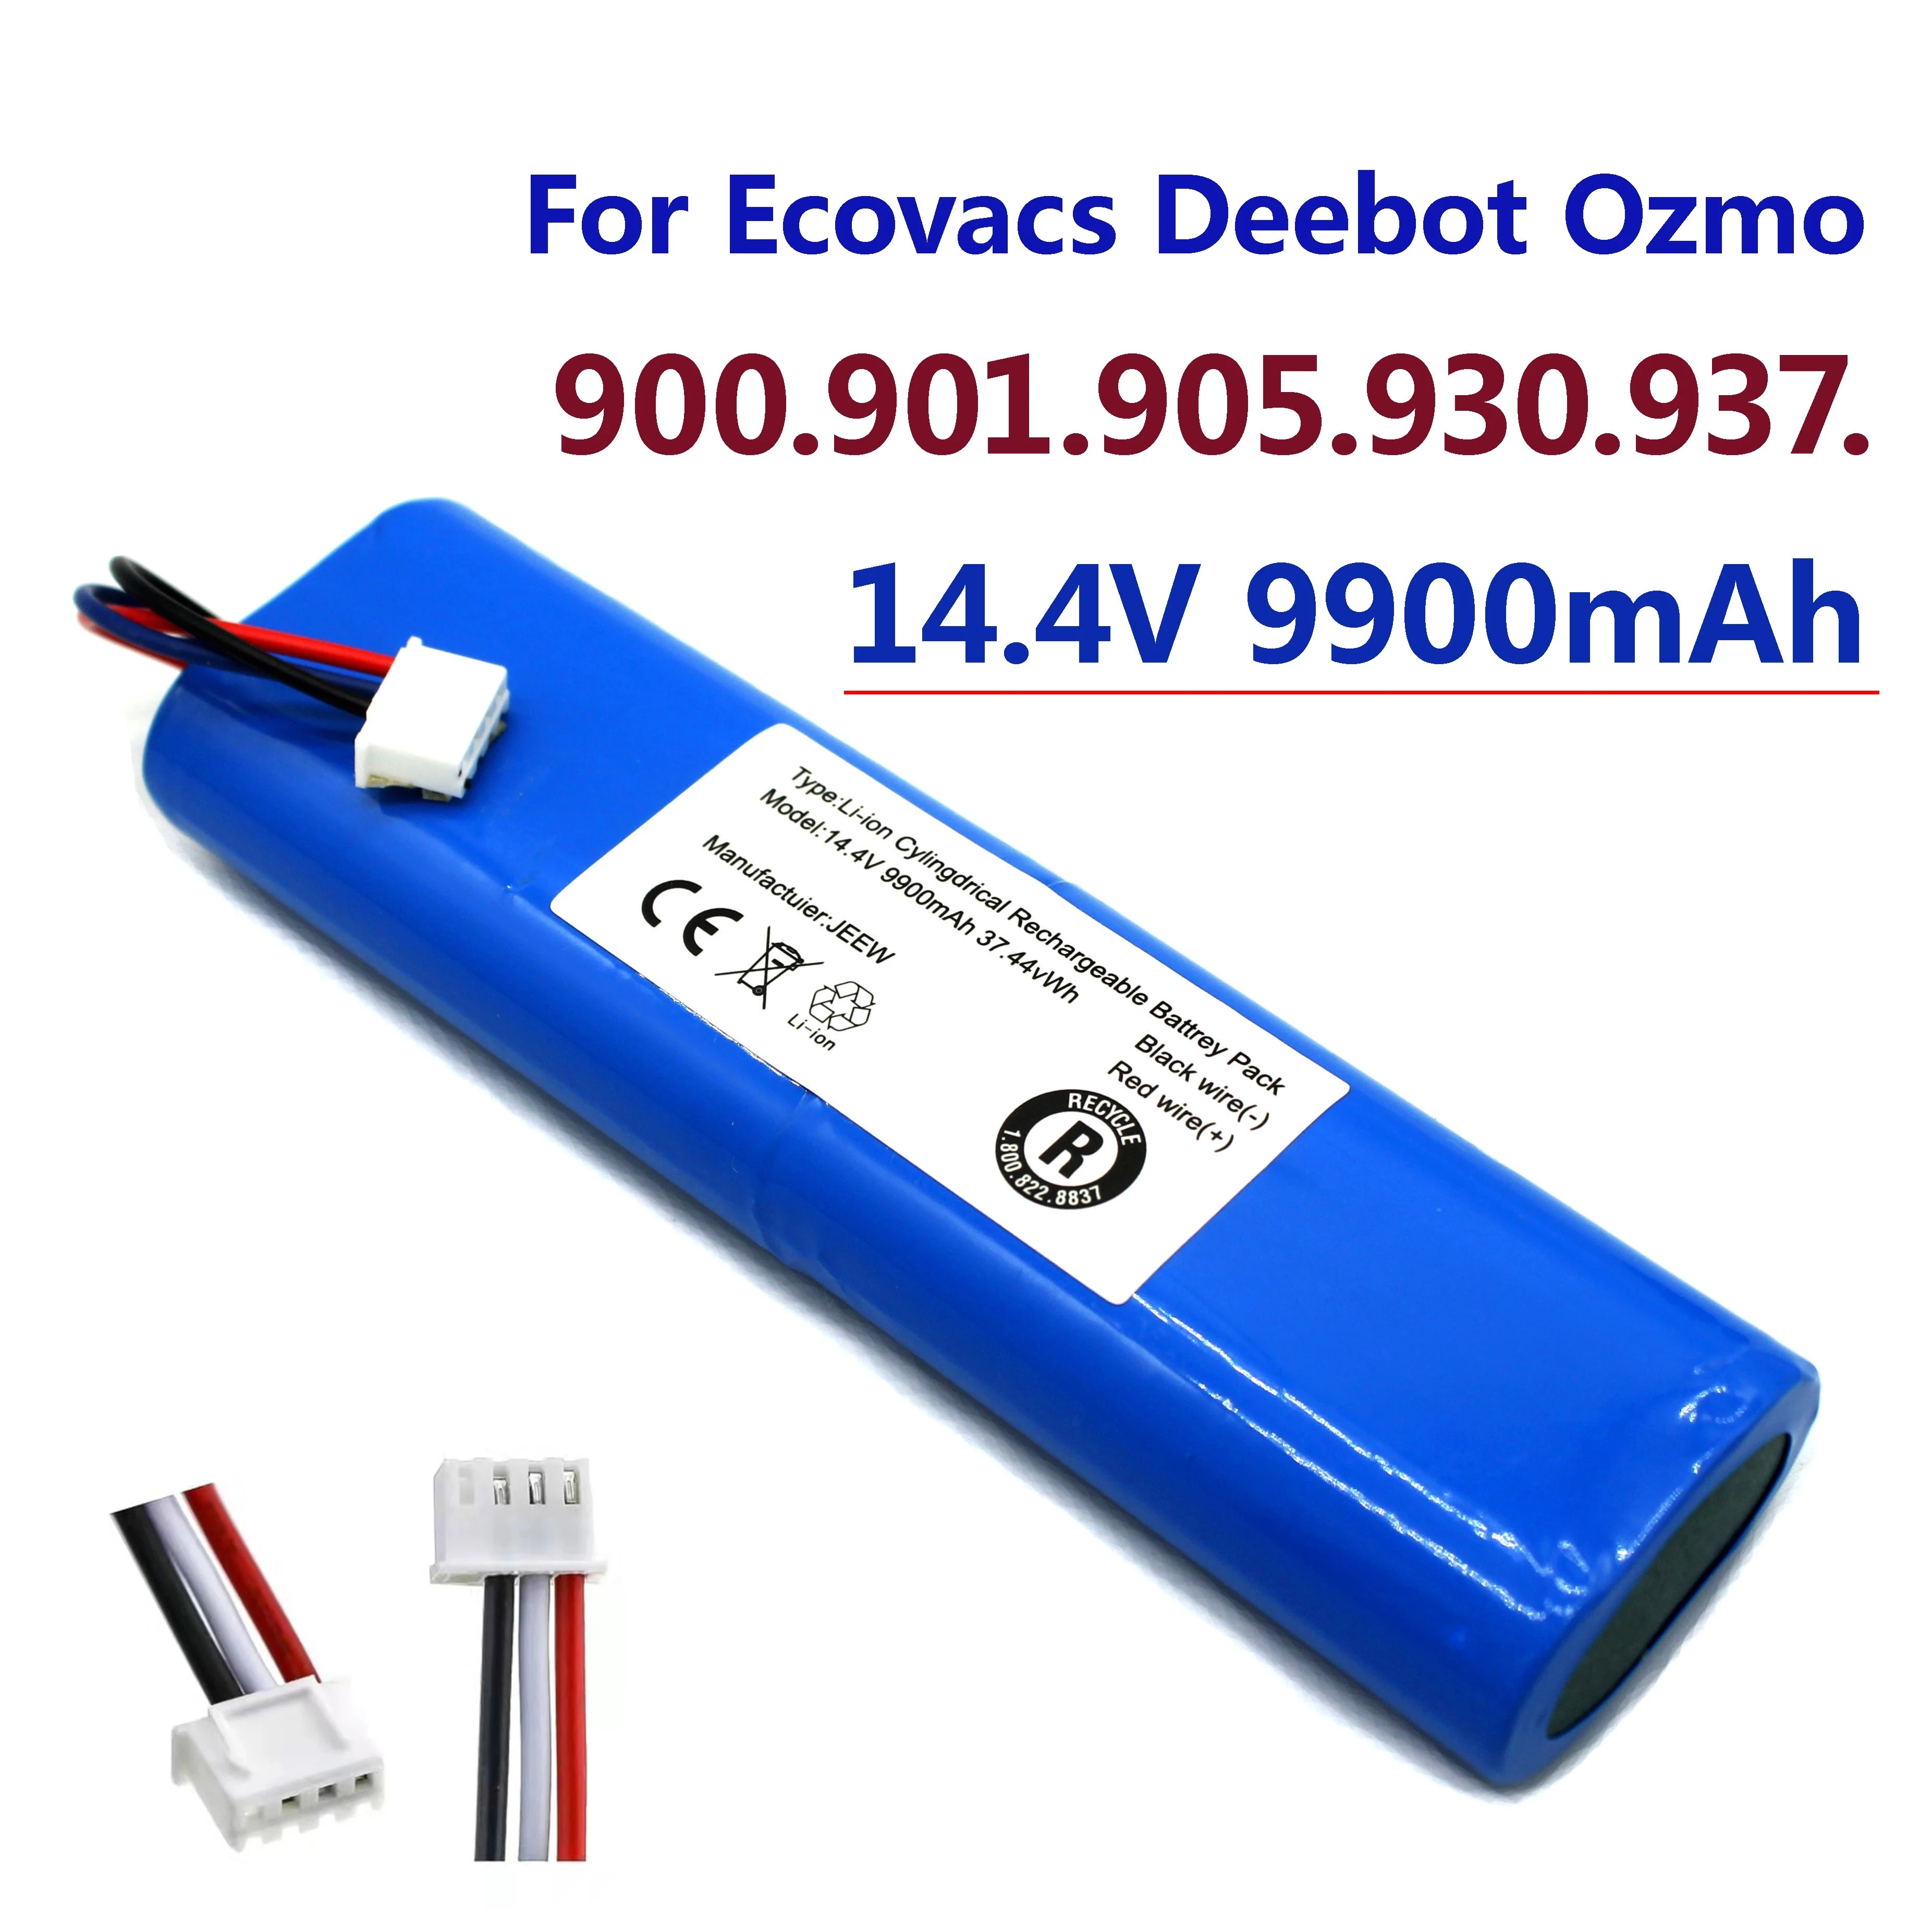 

100% Originate 18650 Battery For Robot Ecovacs Deebot Ozmo 14.4V 9900Mah Vacuum Cleaner 900 901 905 930 937 Novelty